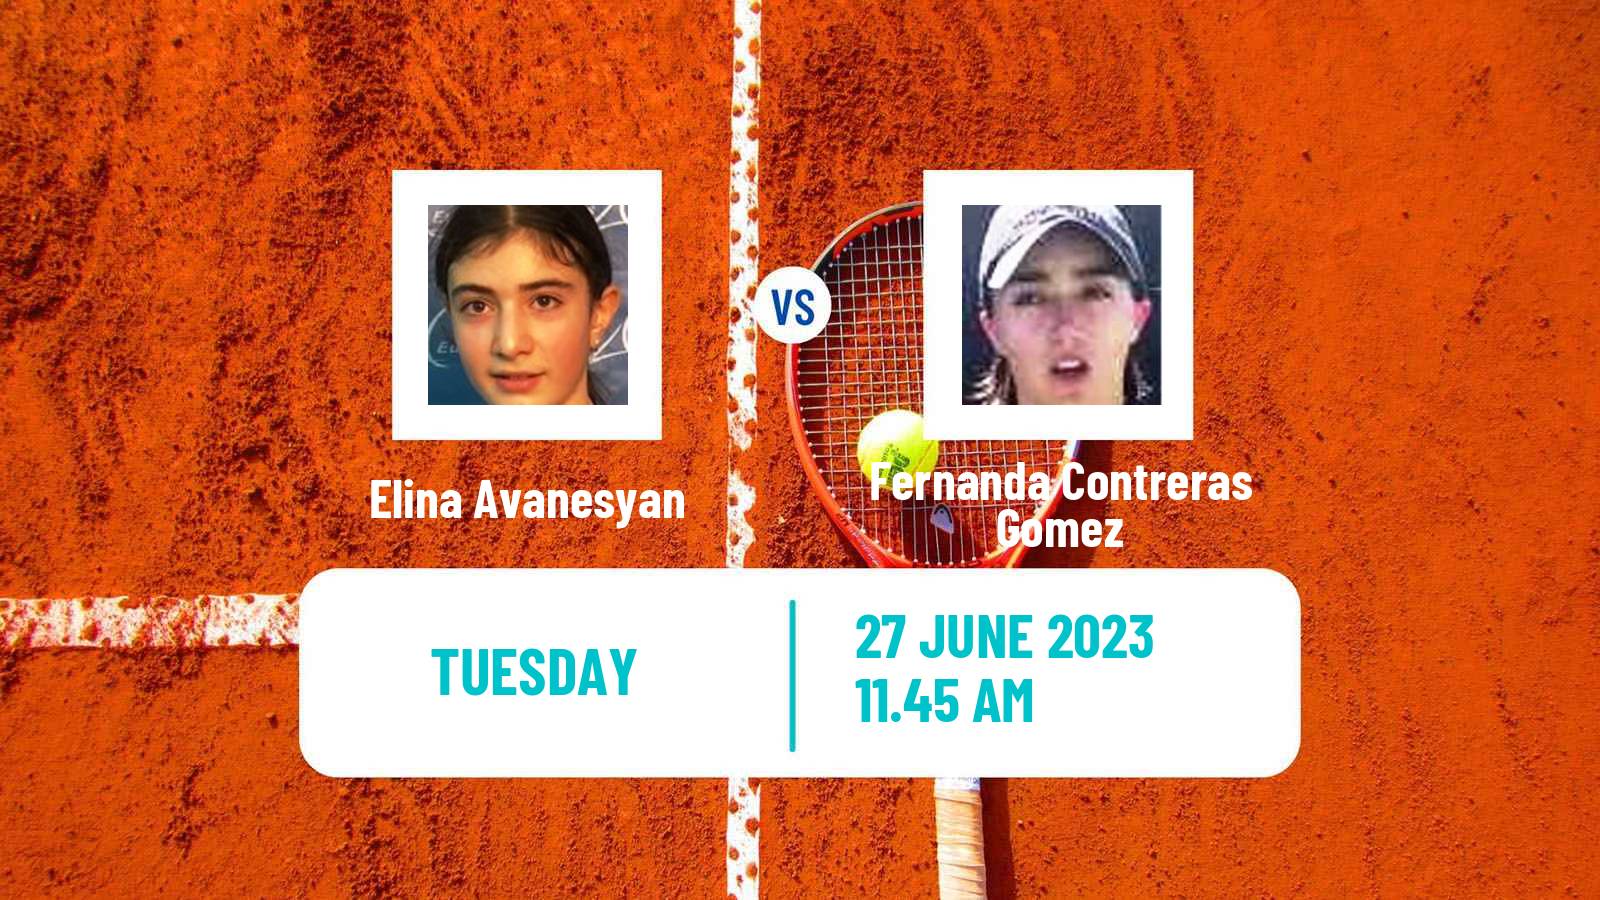 Tennis WTA Wimbledon Elina Avanesyan - Fernanda Contreras Gomez